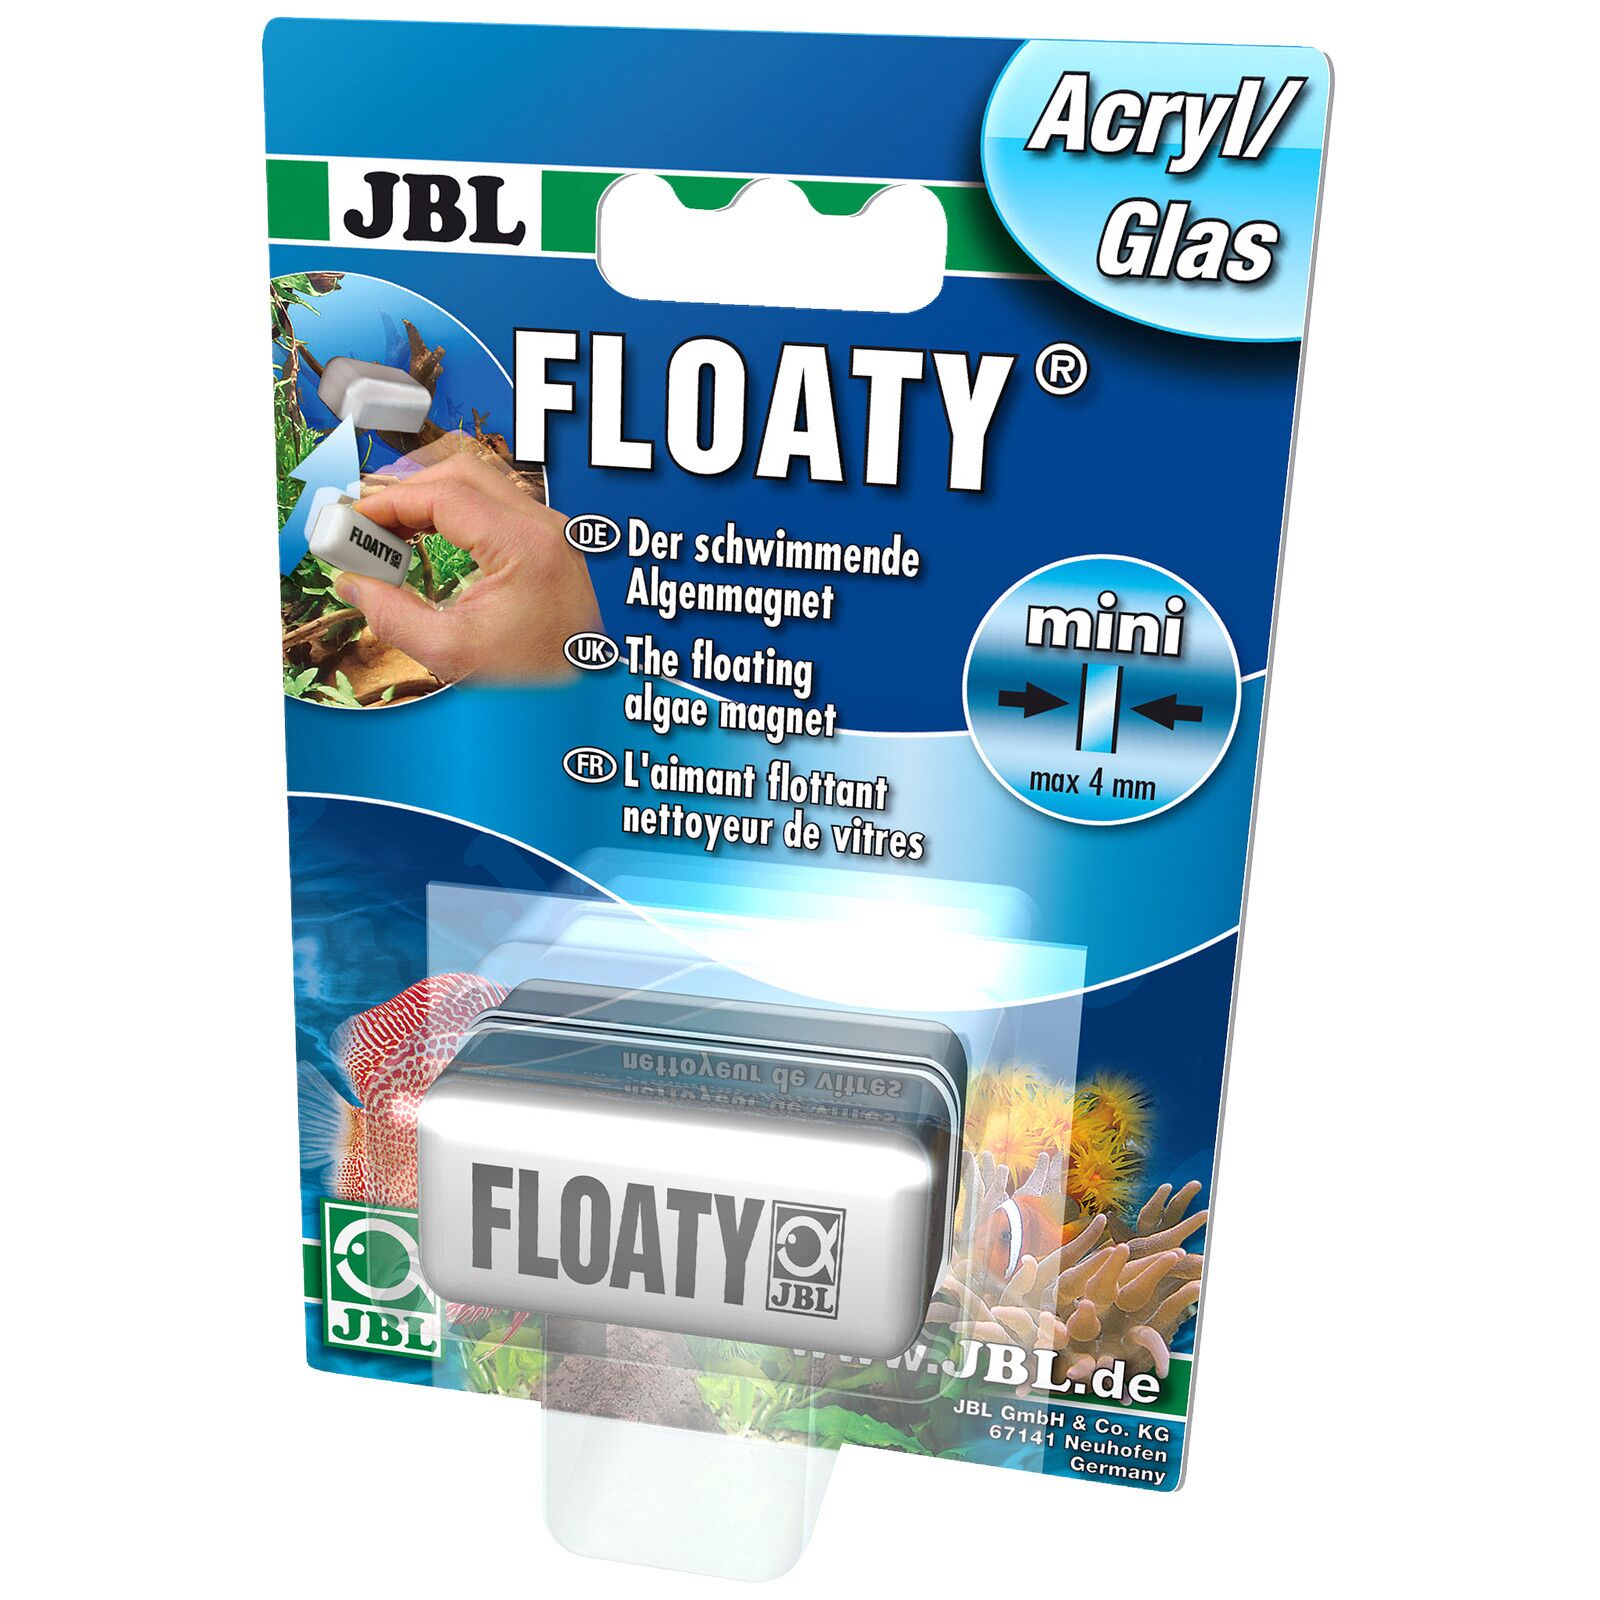 JBL - Floaty Acryl/Glas